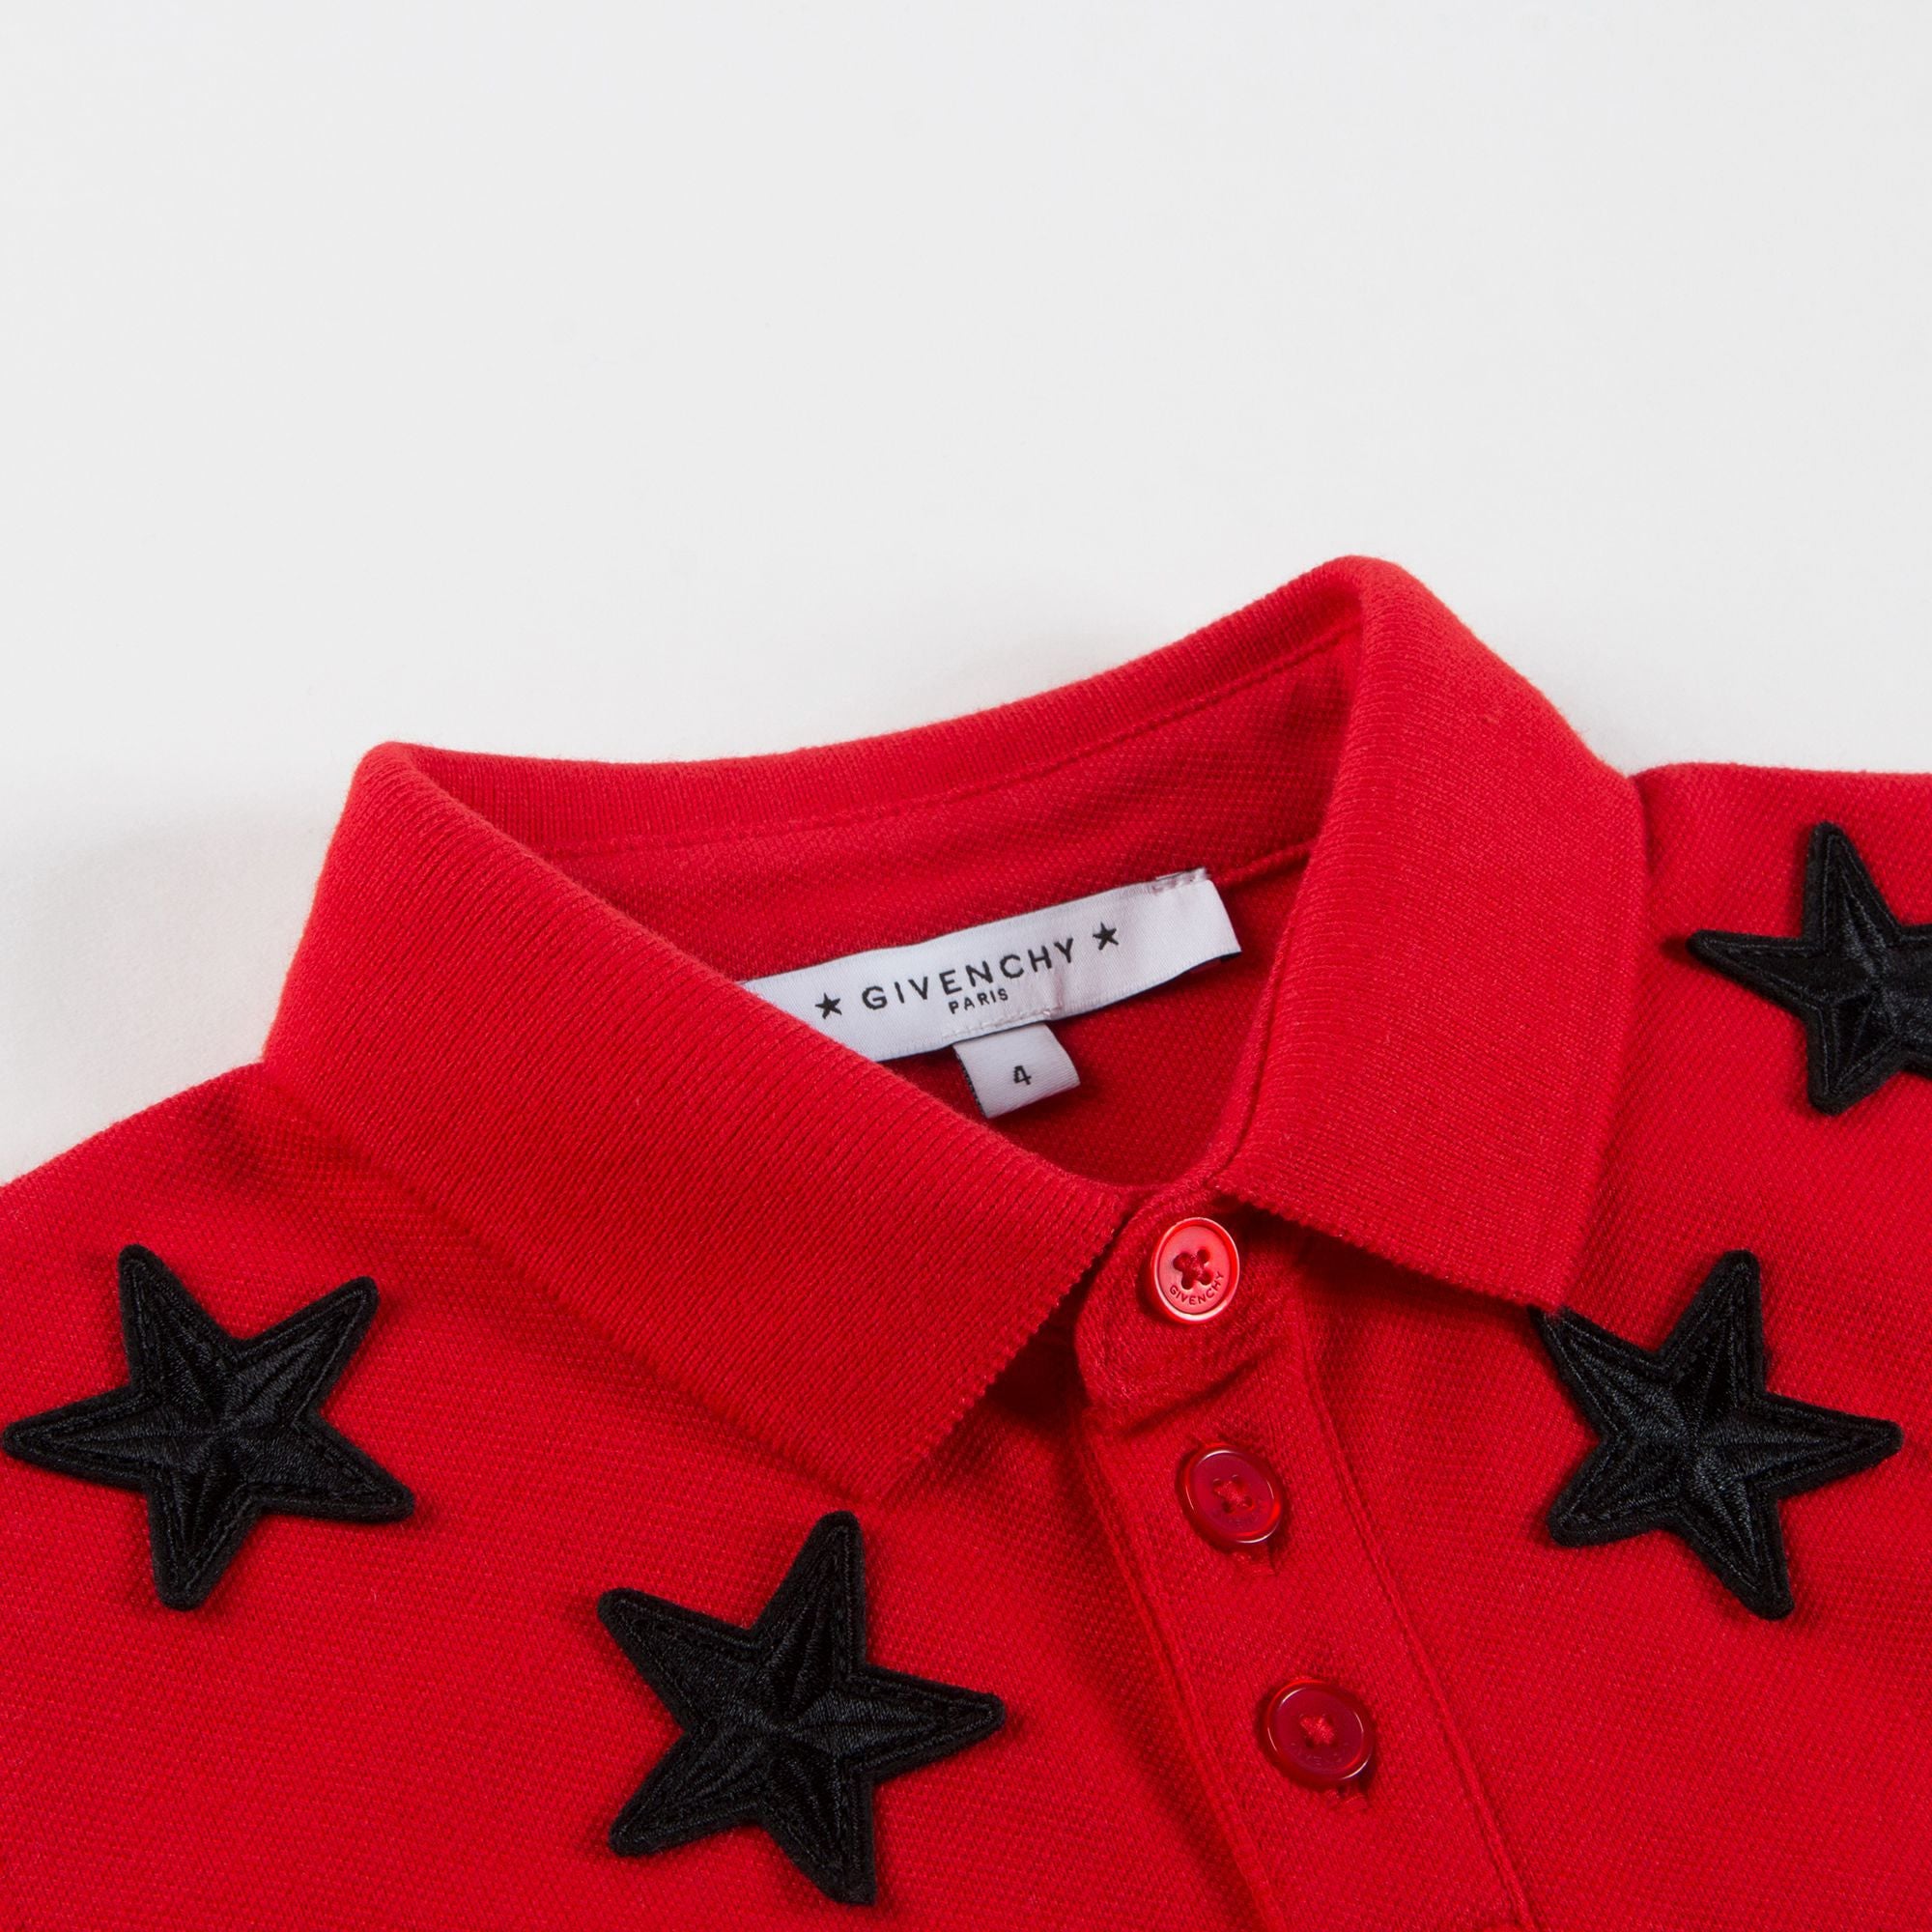 Boys Red Stars Printed Polo Shirt